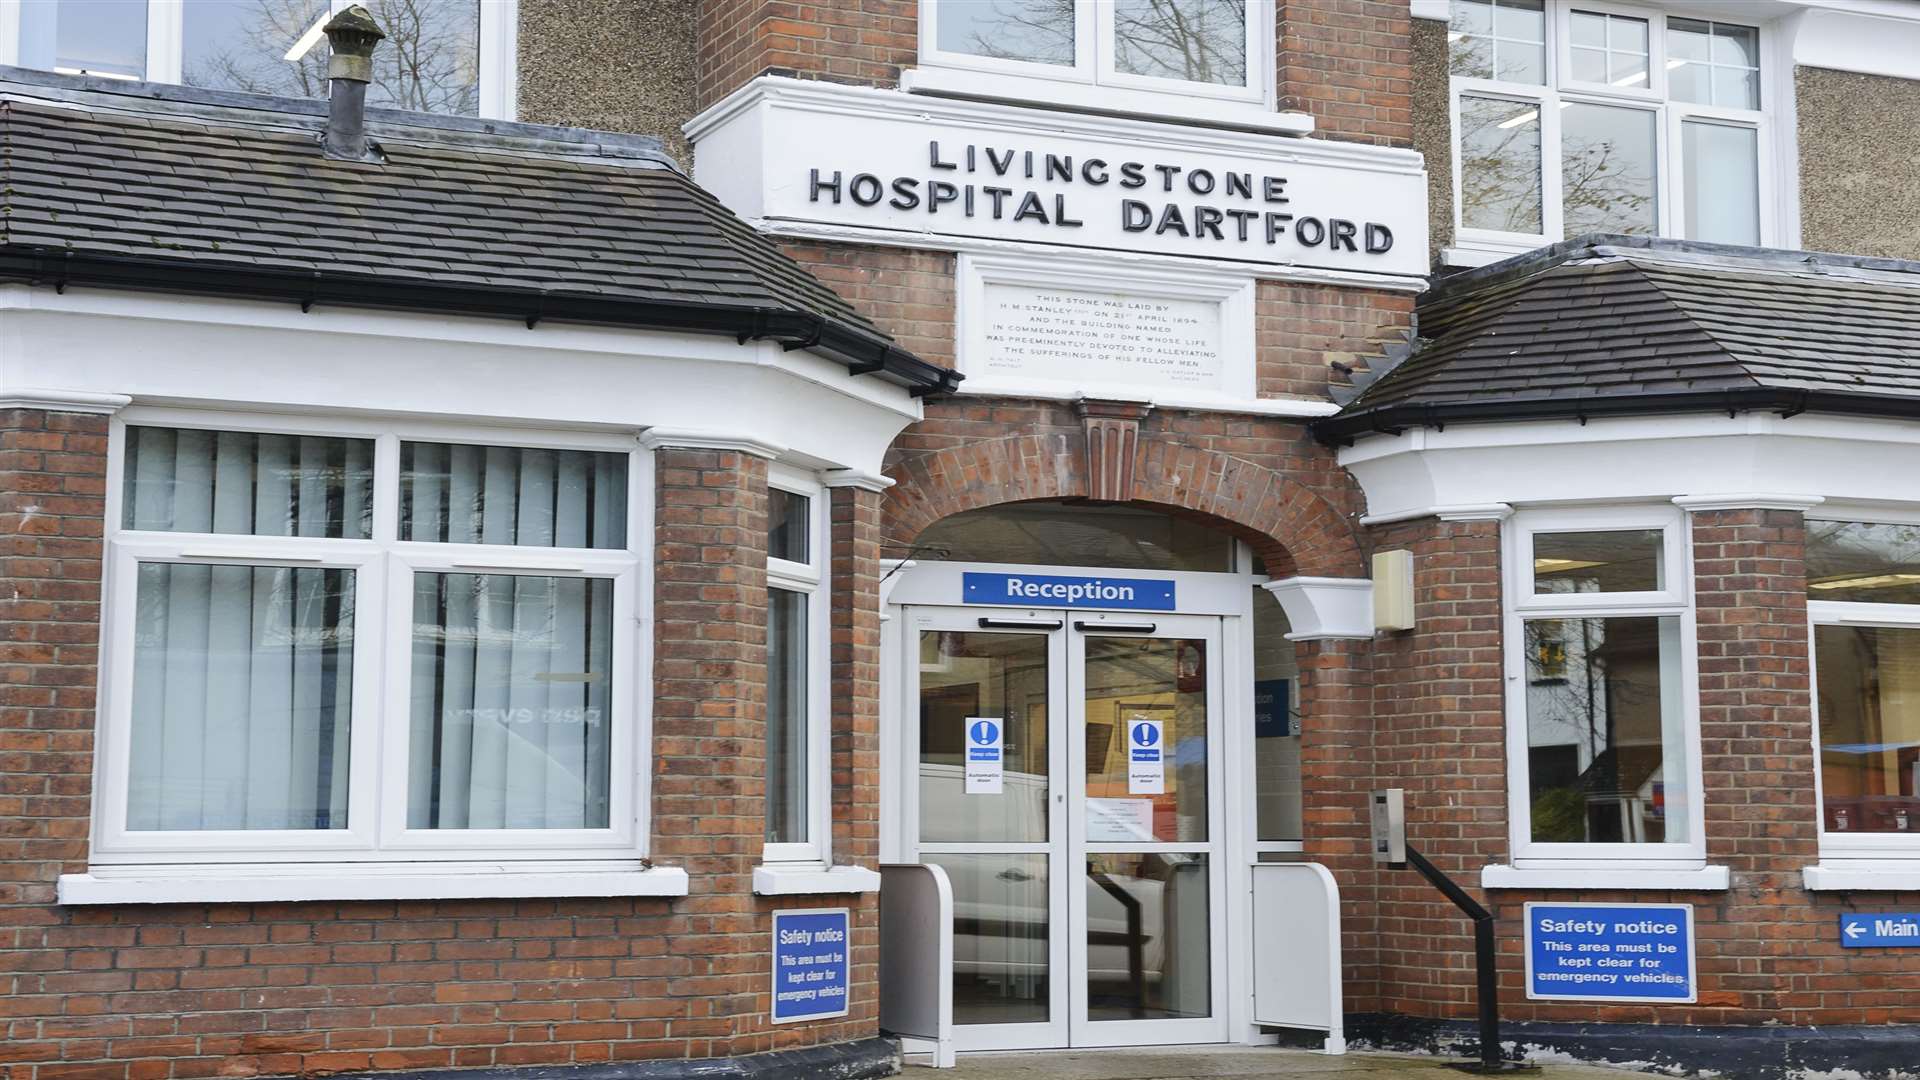 Livingstone Community Hospital, East Hill, Dartford